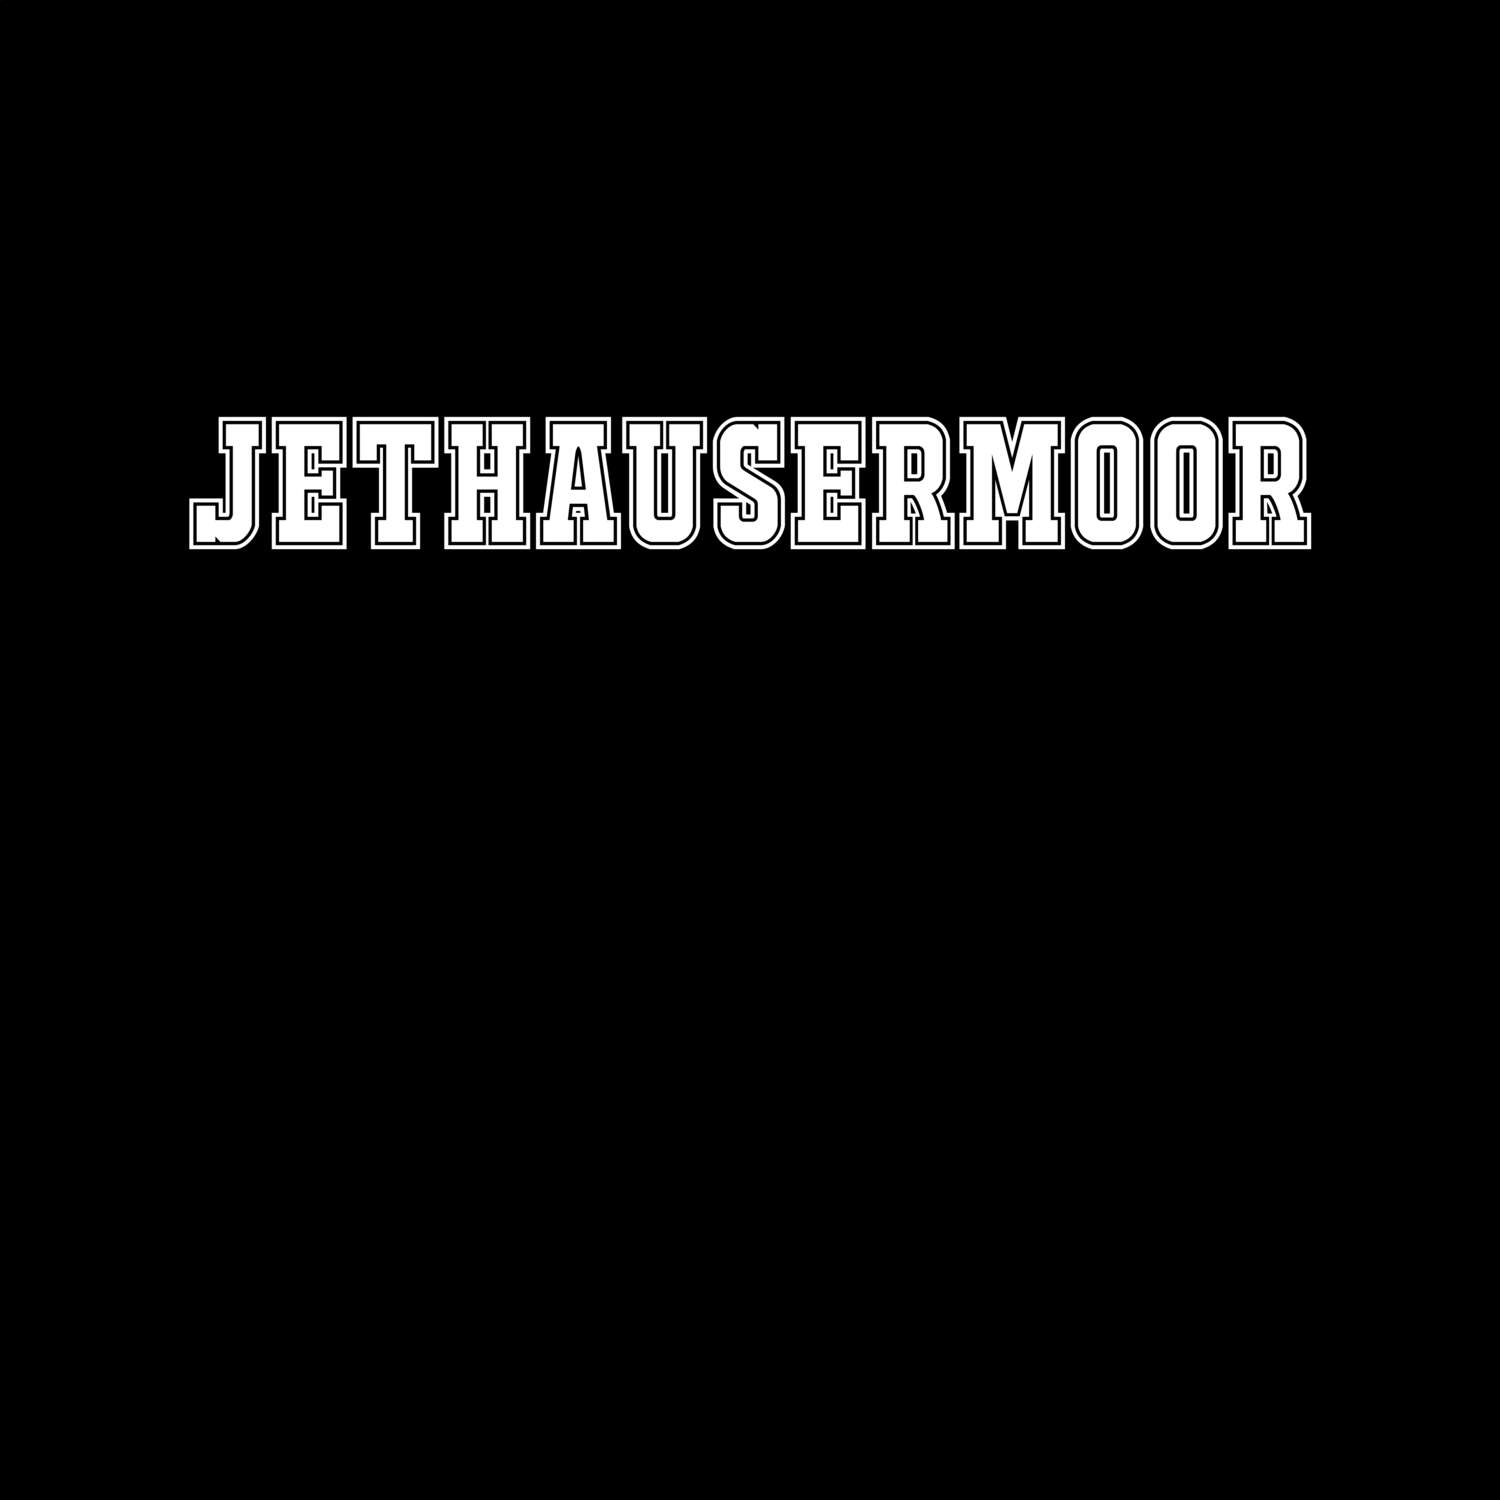 Jethausermoor T-Shirt »Classic«